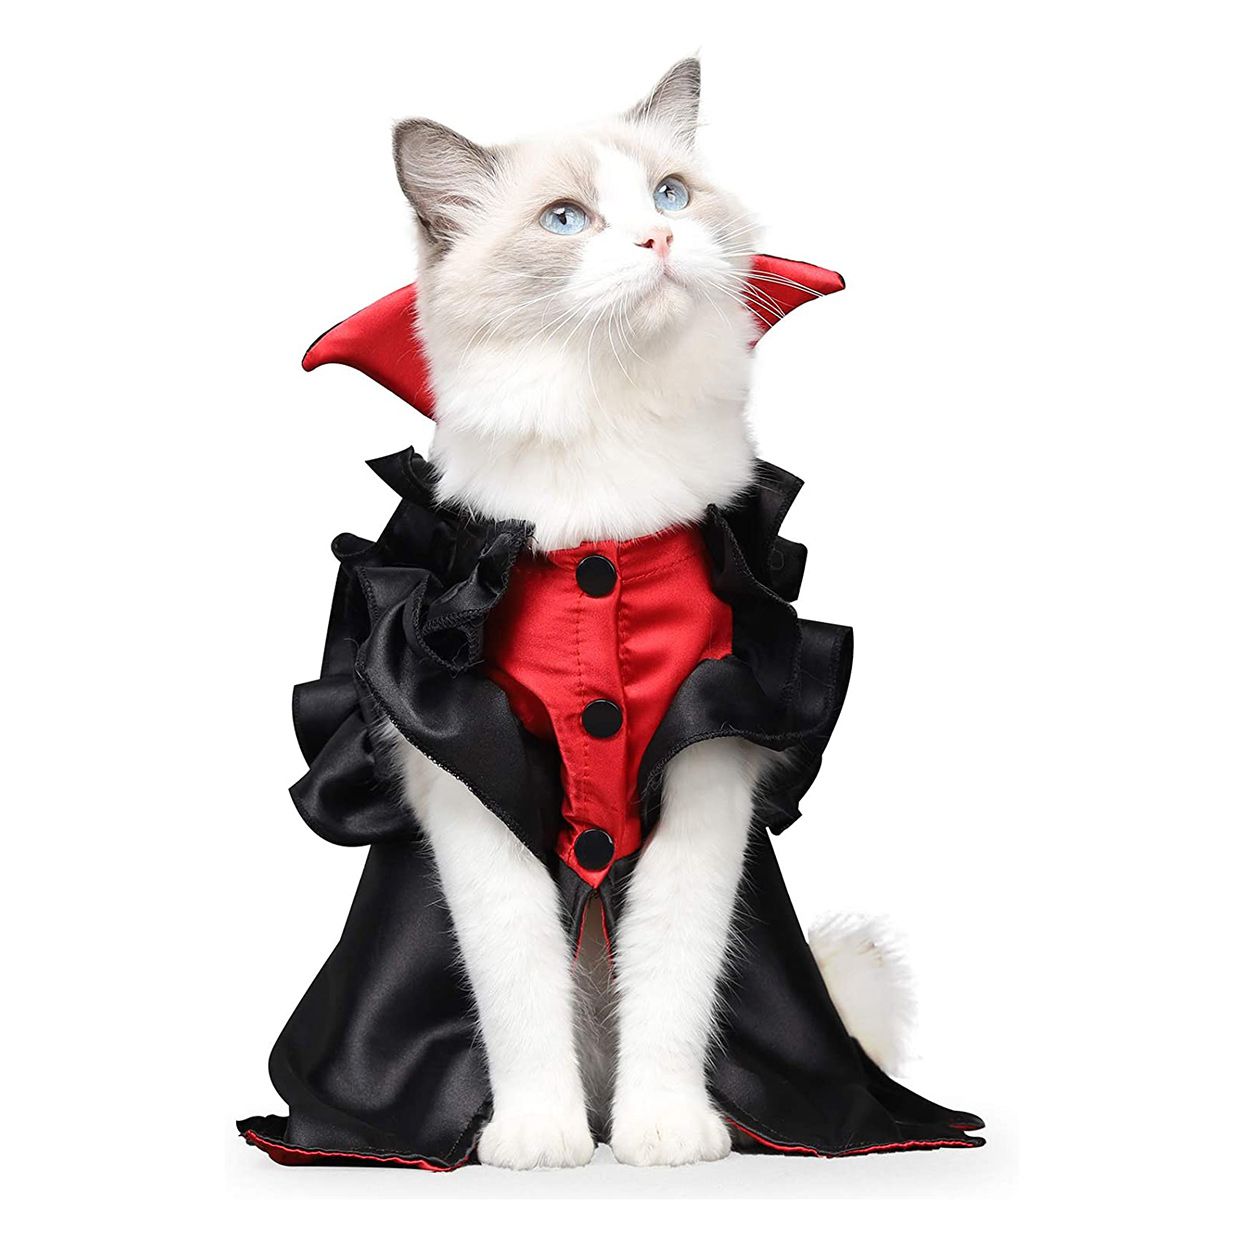 Cat wearing a LIANZIMUA Vampire Cat Halloween Costume on a white background